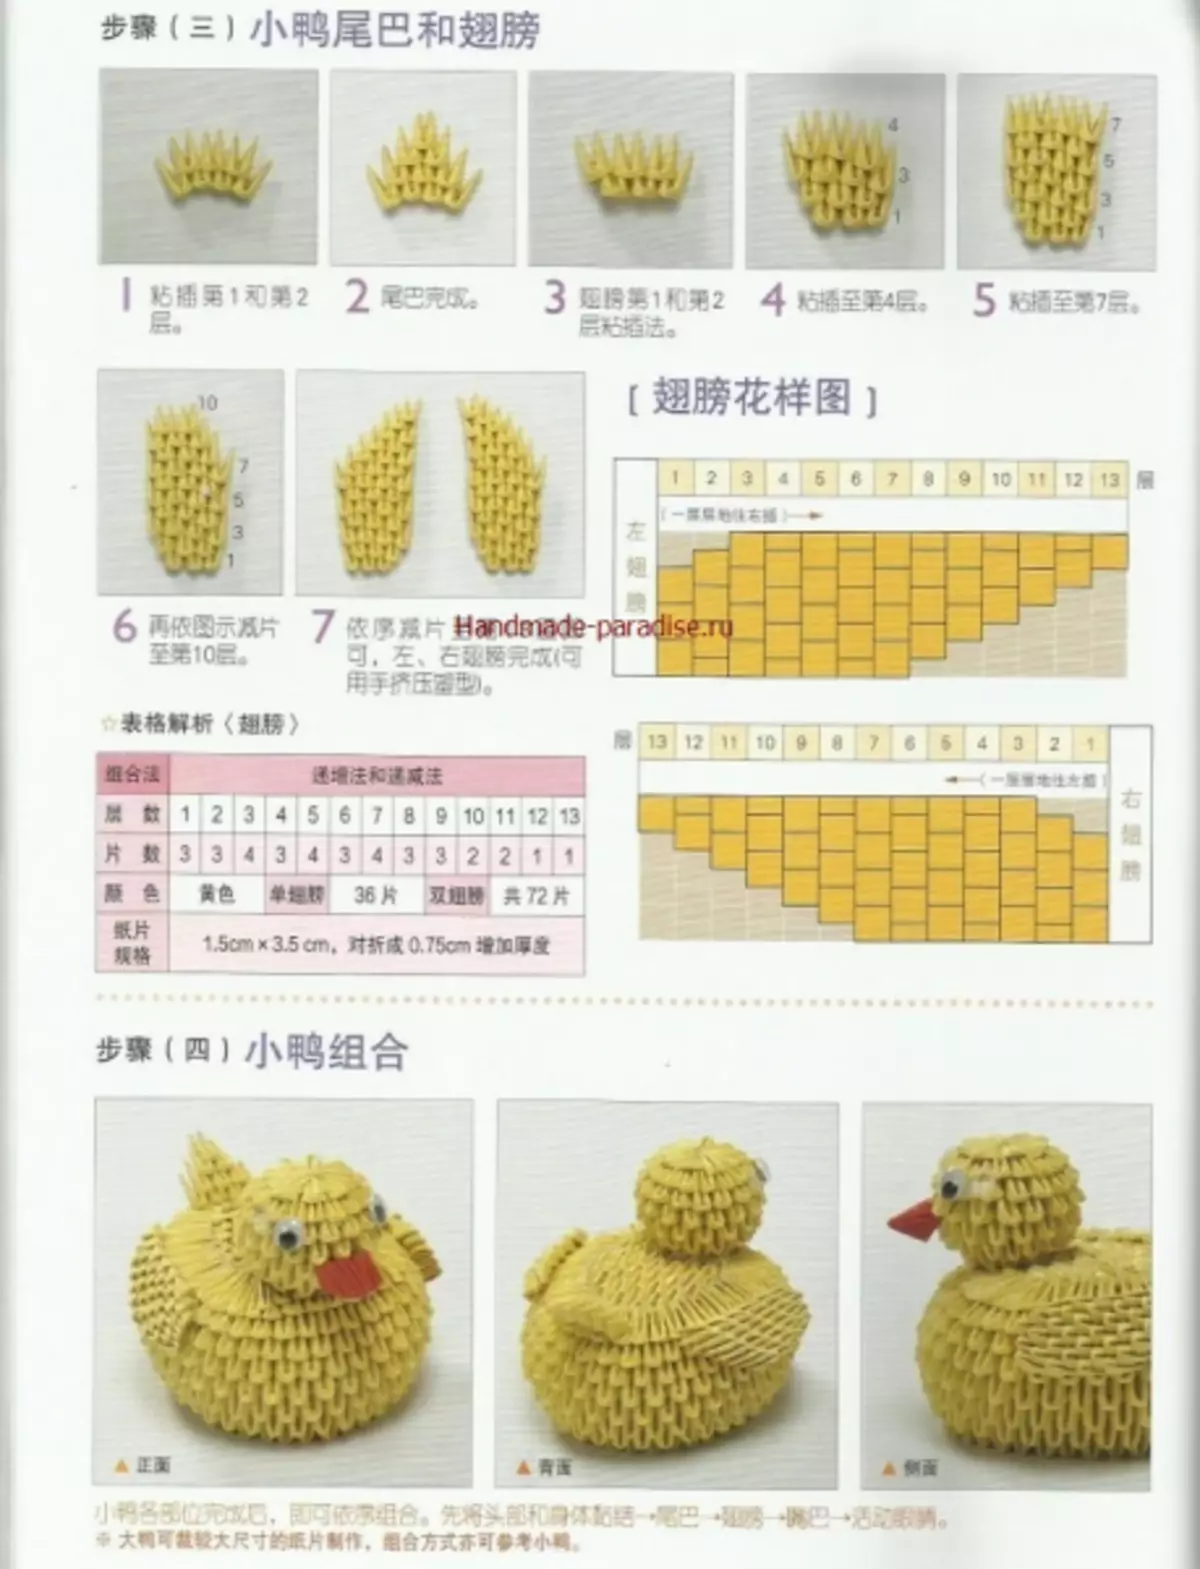 Modular Origami. Japananese magazine nrog cov chav kawm